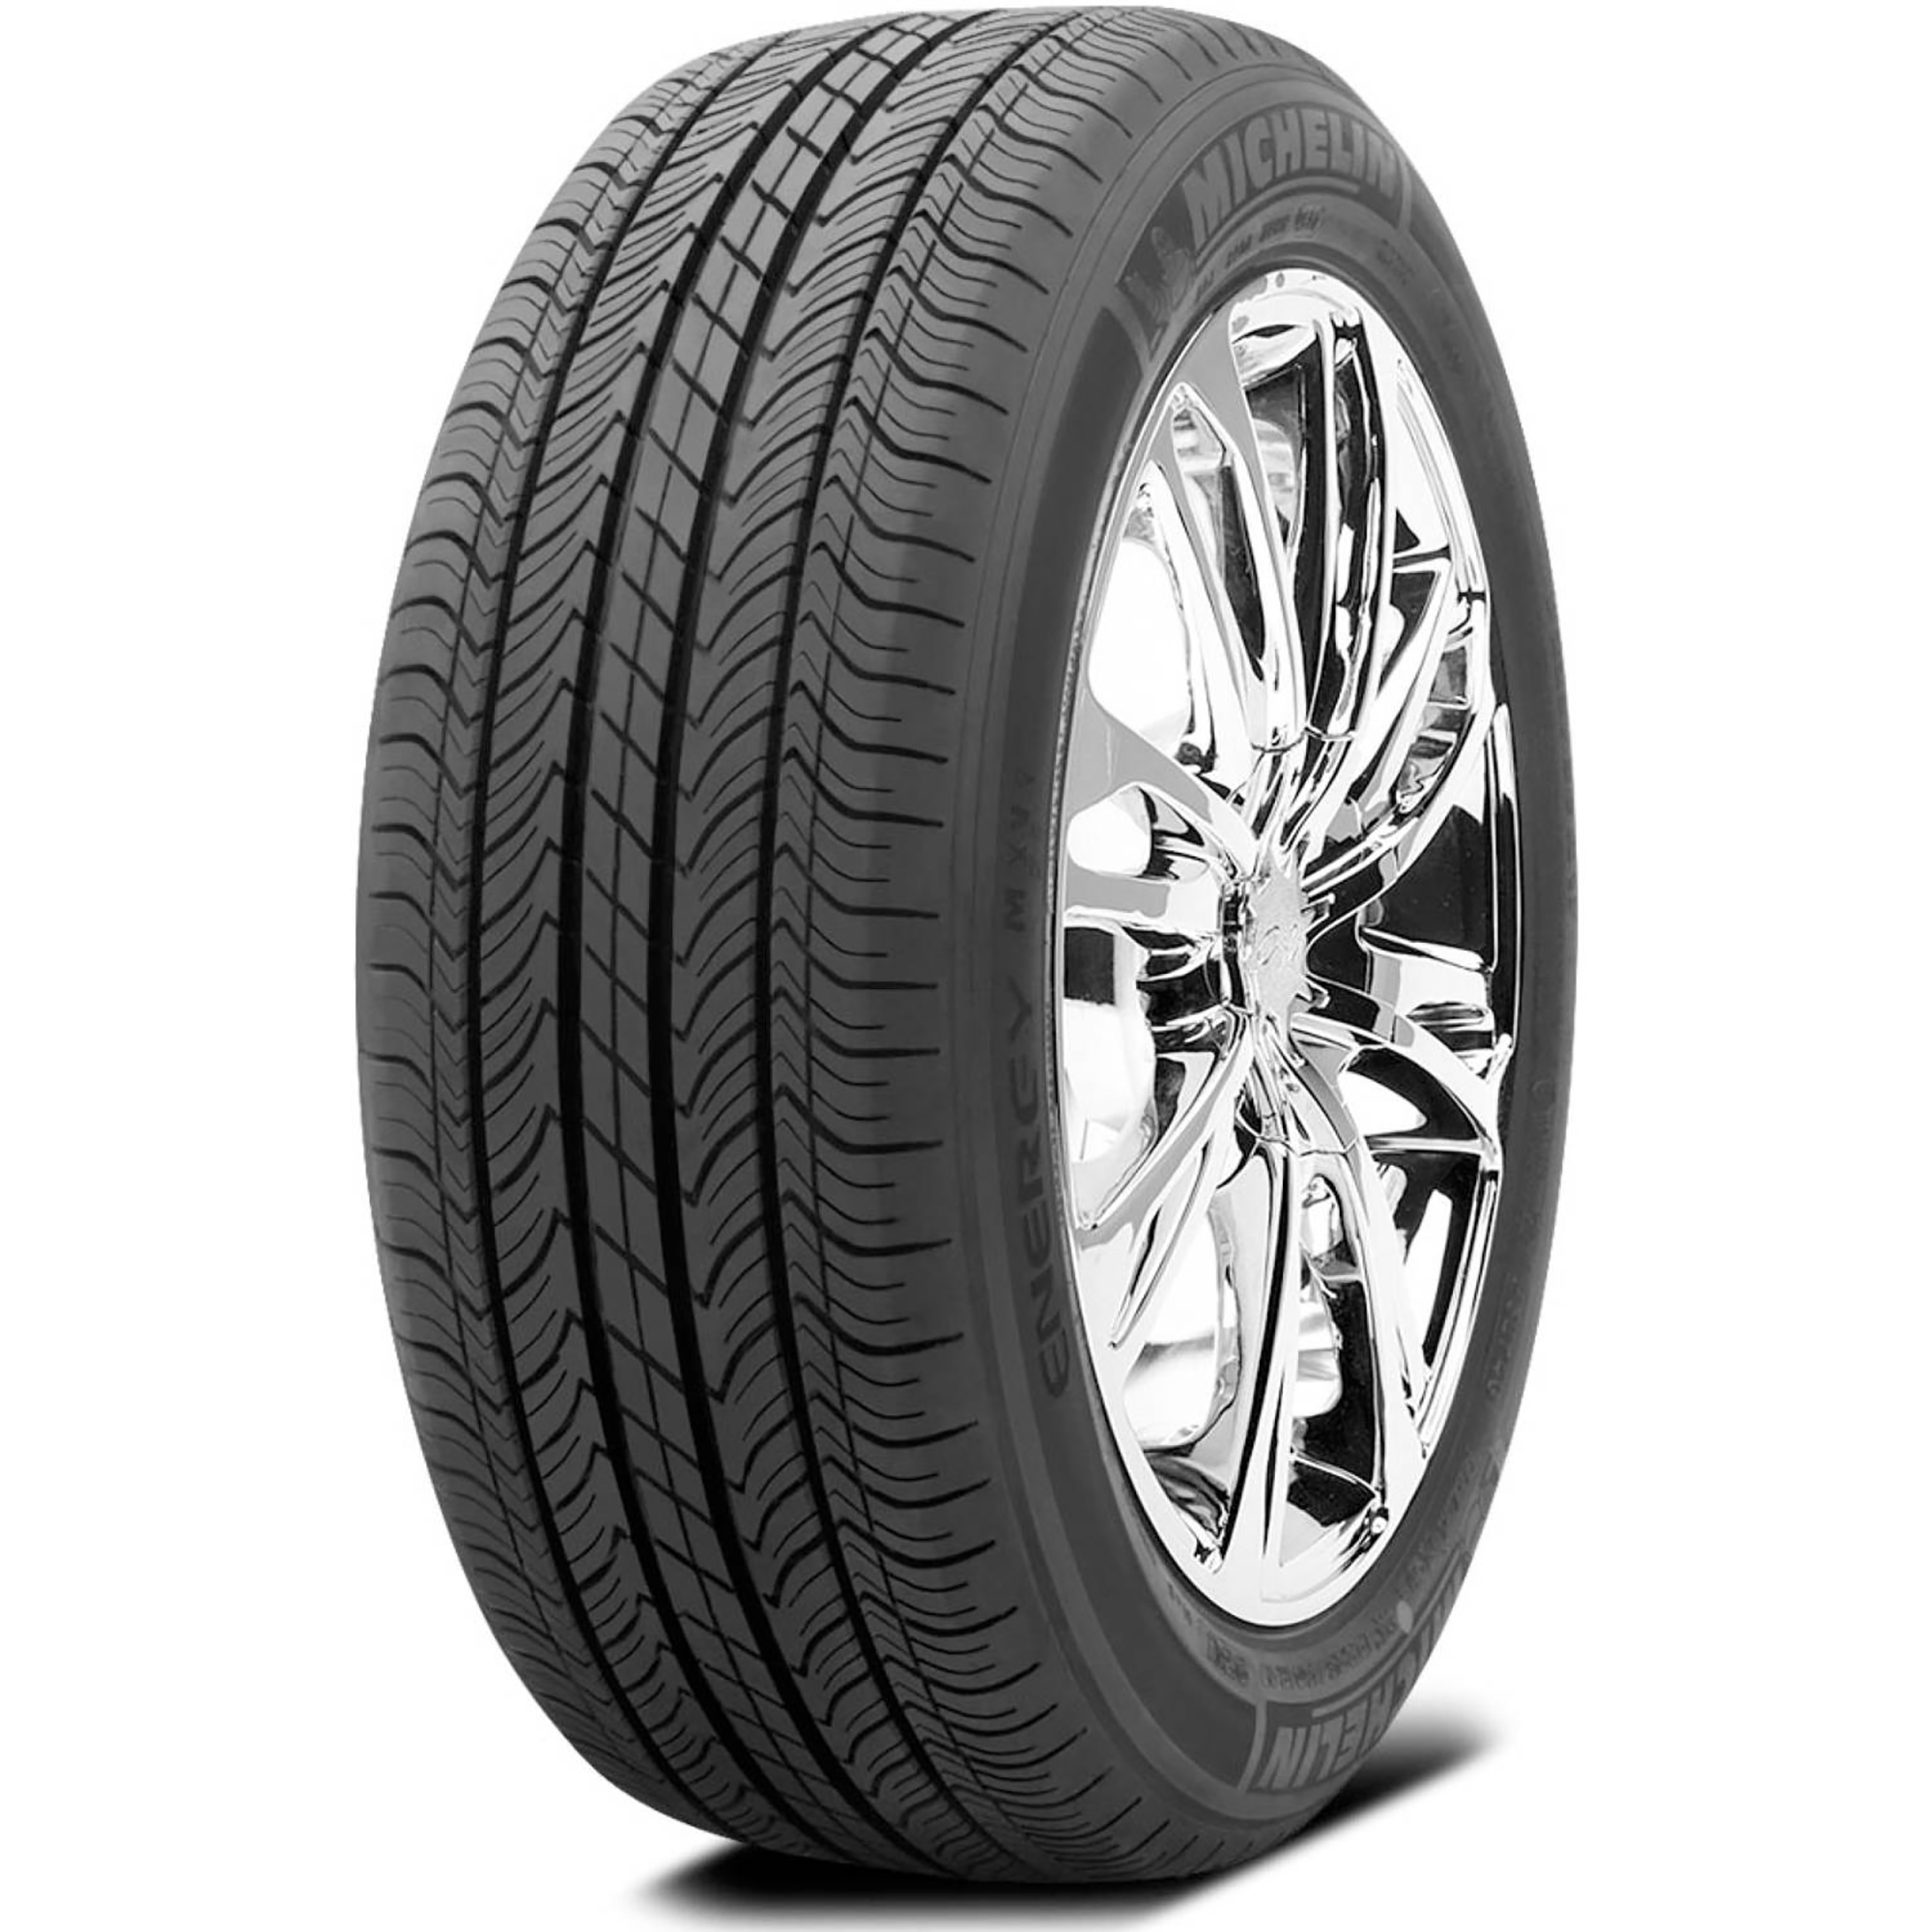 Michelin Energy MXV4 Plus All-Season 235/65R17 104H Tire Fits: 2017-18 Honda CR-V EX, 2019 Honda CR-V LX - image 1 of 4